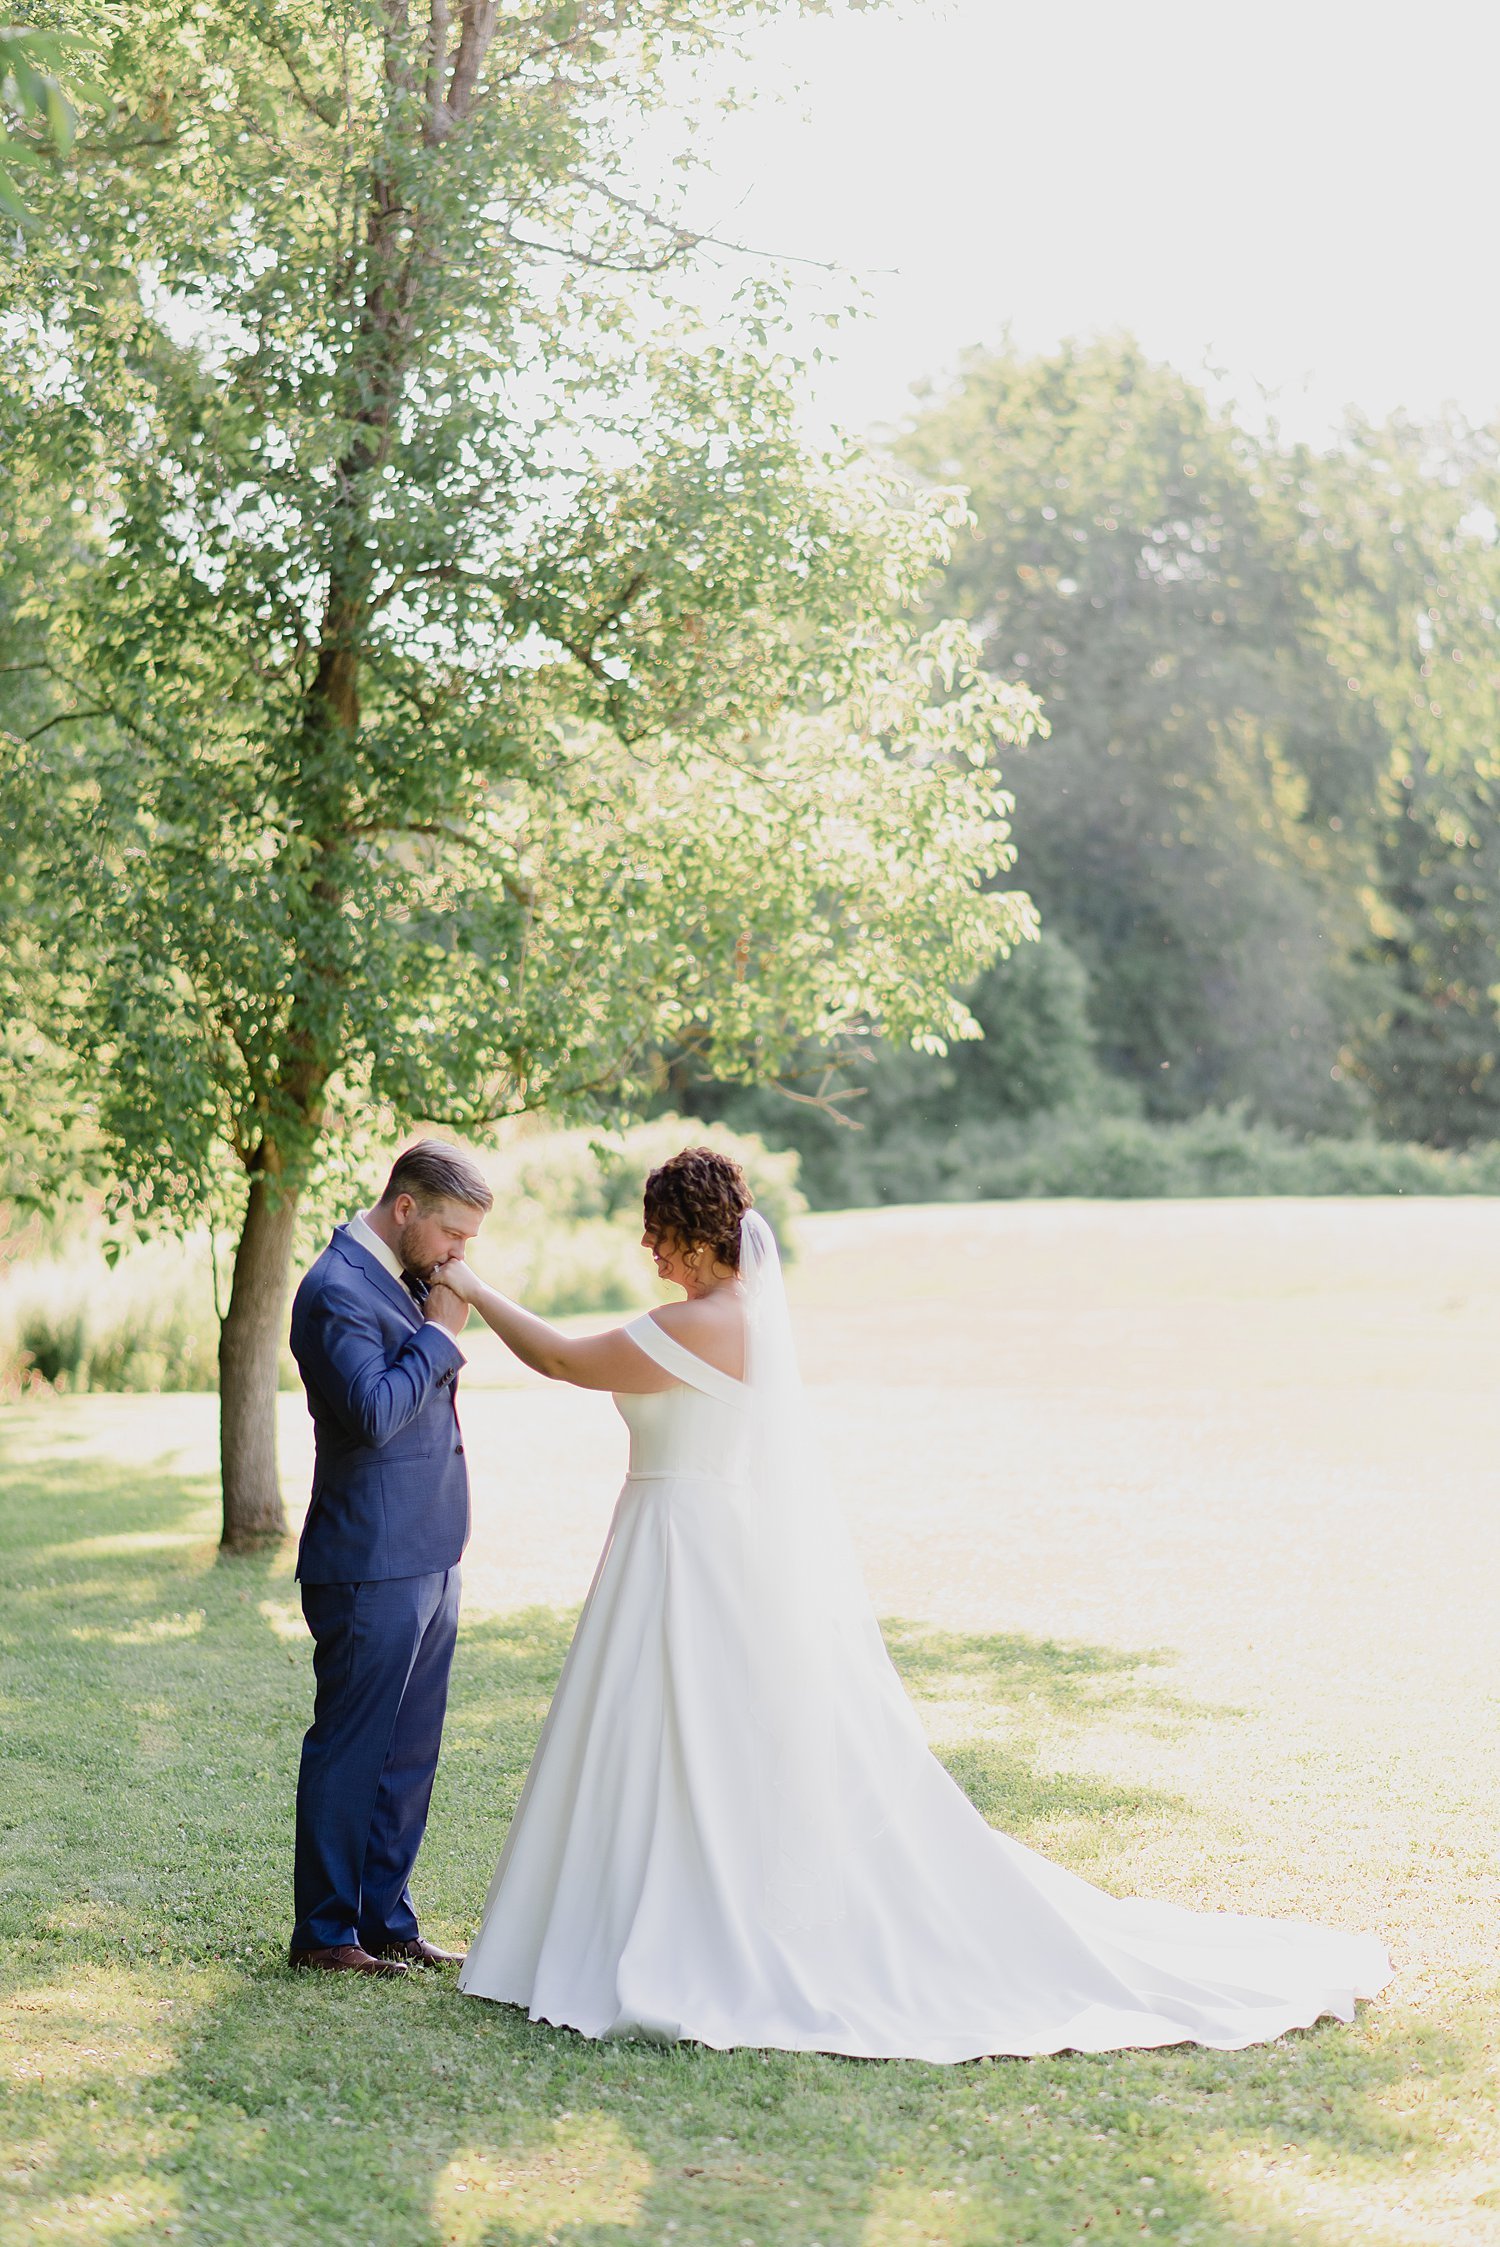 Elegant Summer Backyard Tented Wedding in Sydenham, Ontario | Prince Edward County Wedding Photographer | Holly McMurter Photographs_0058.jpg